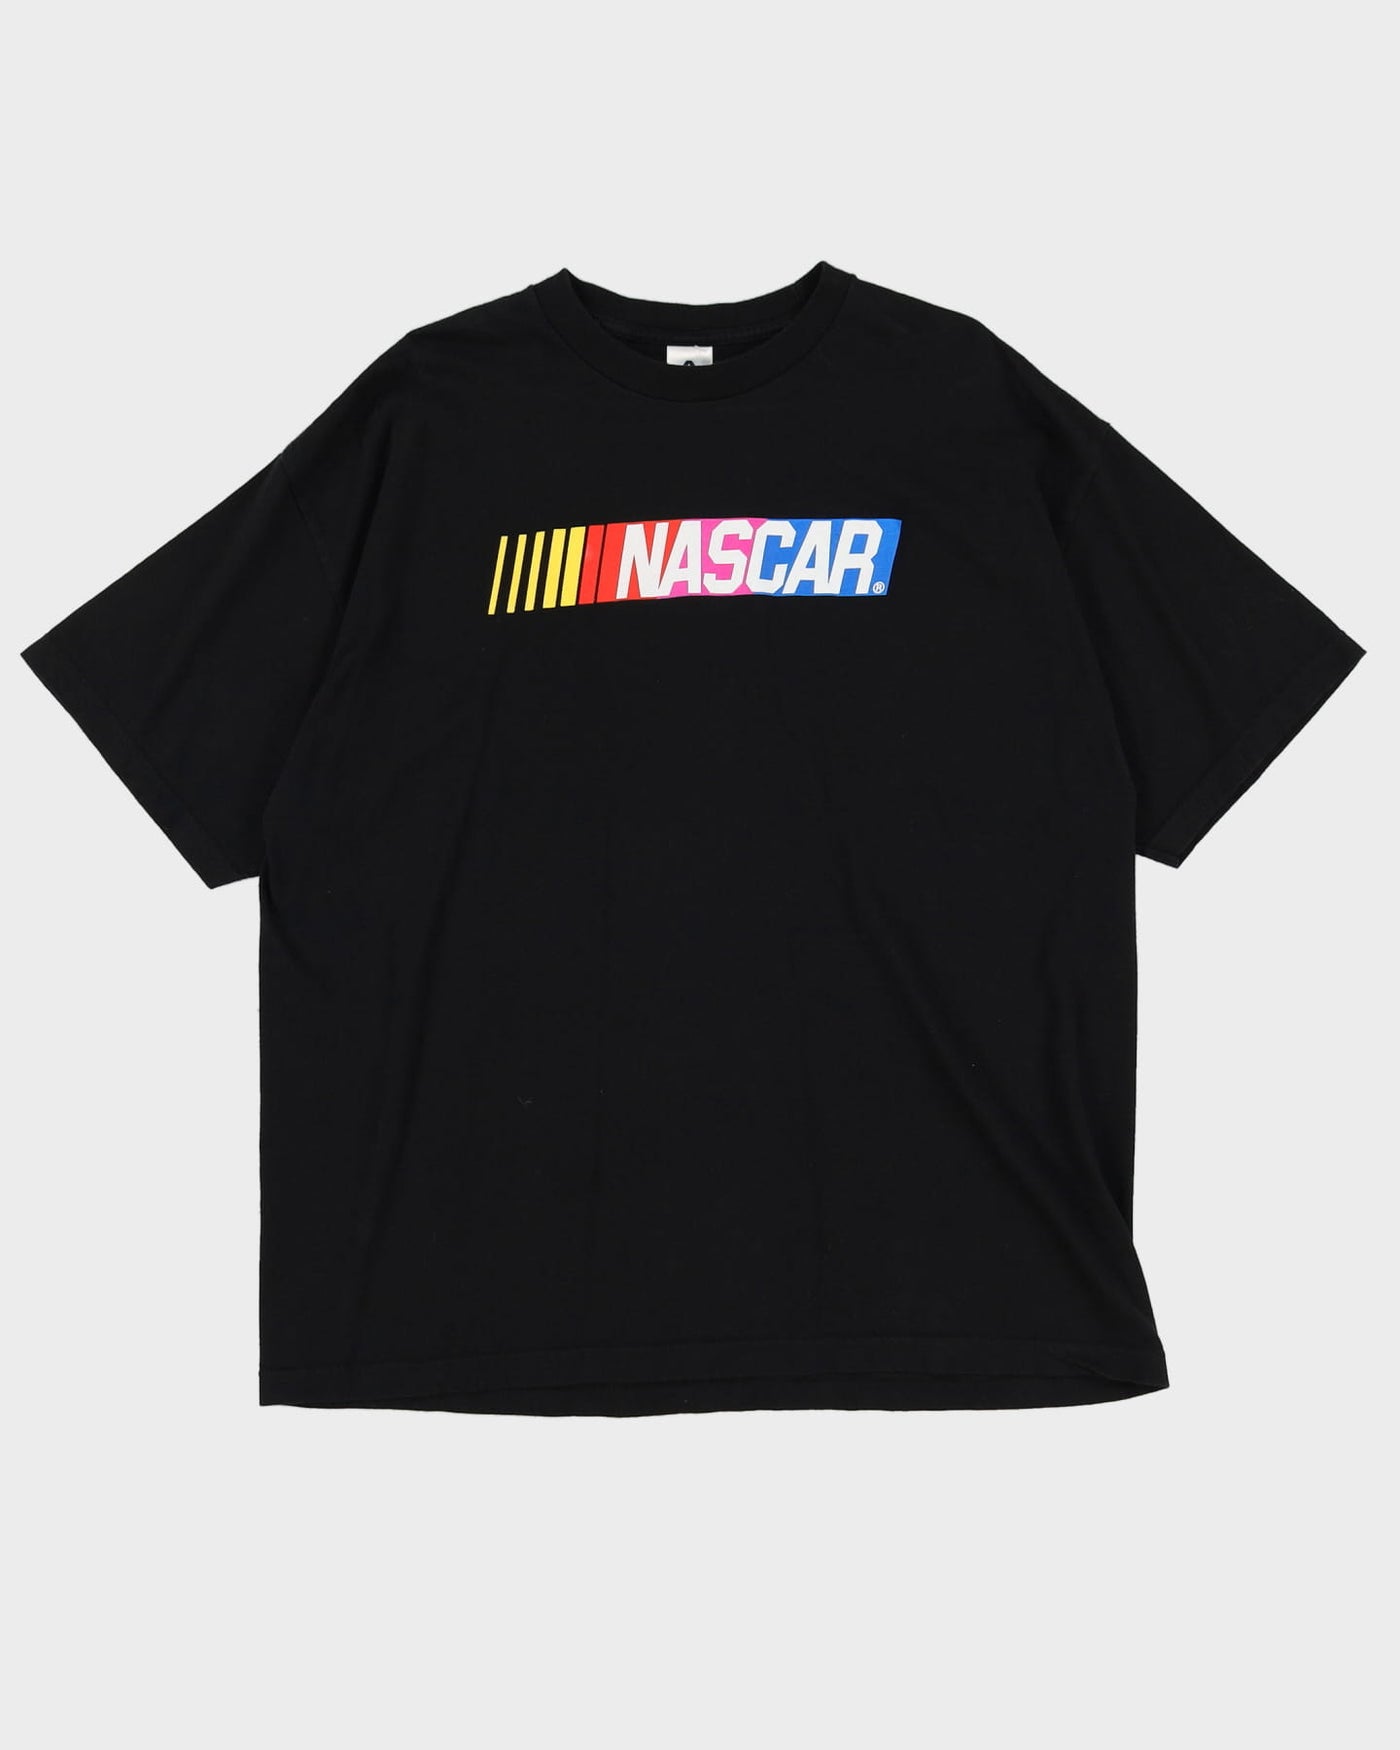 Late 90s Nascar Championship Black T-Shirt - XXL